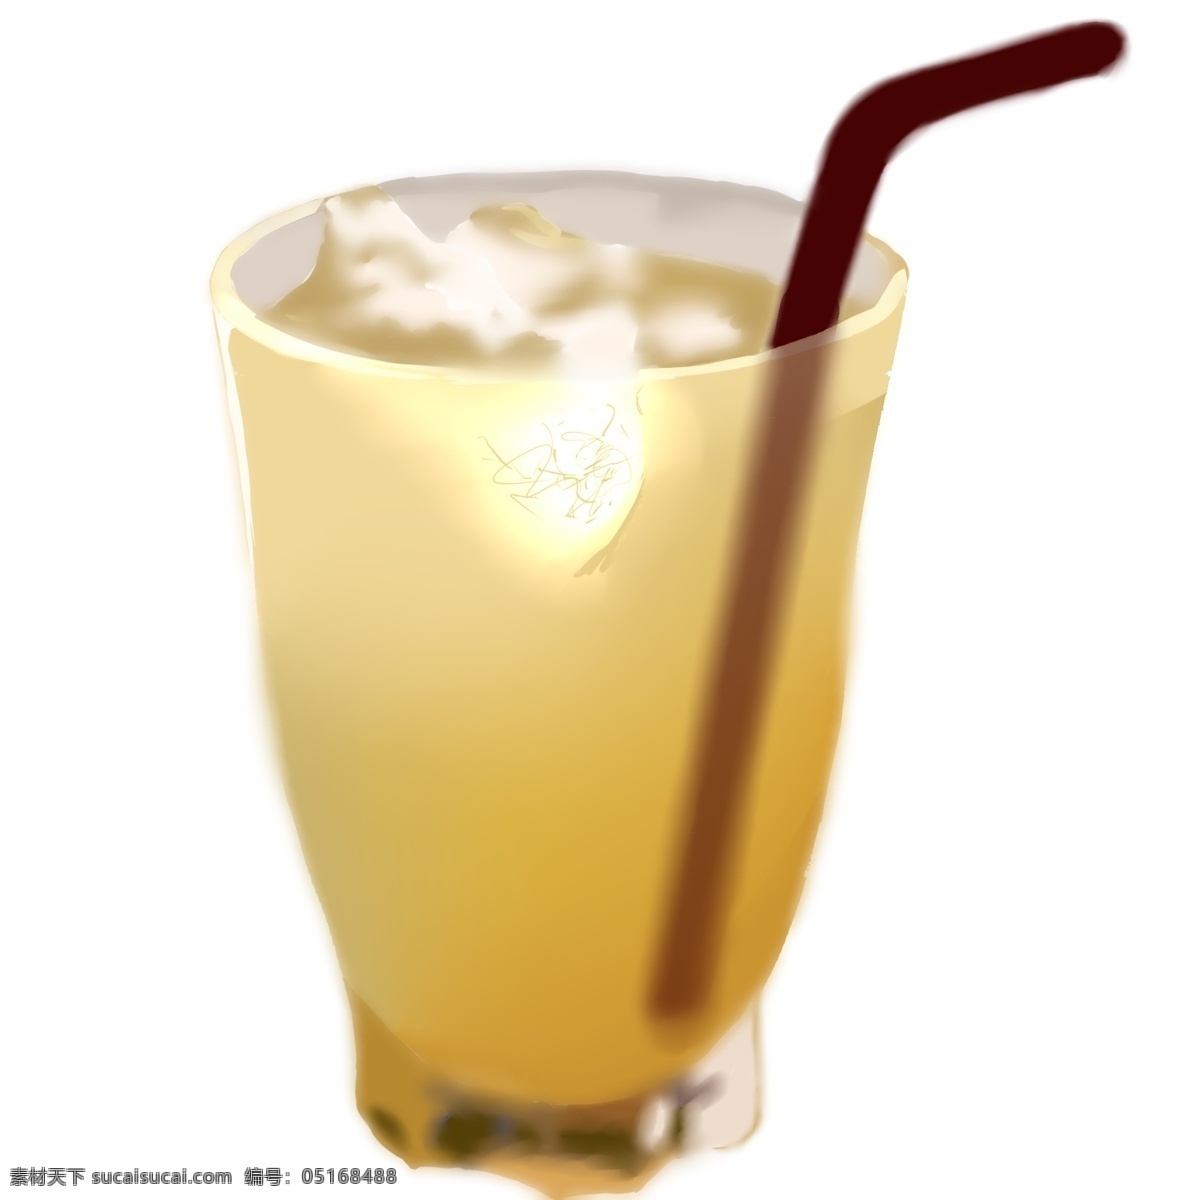 黄色 饮料 装饰 插画 黄色的饮料 美味的饮料 黑色的吸管 夏日饮料 饮料装饰 饮料插画 立体饮料